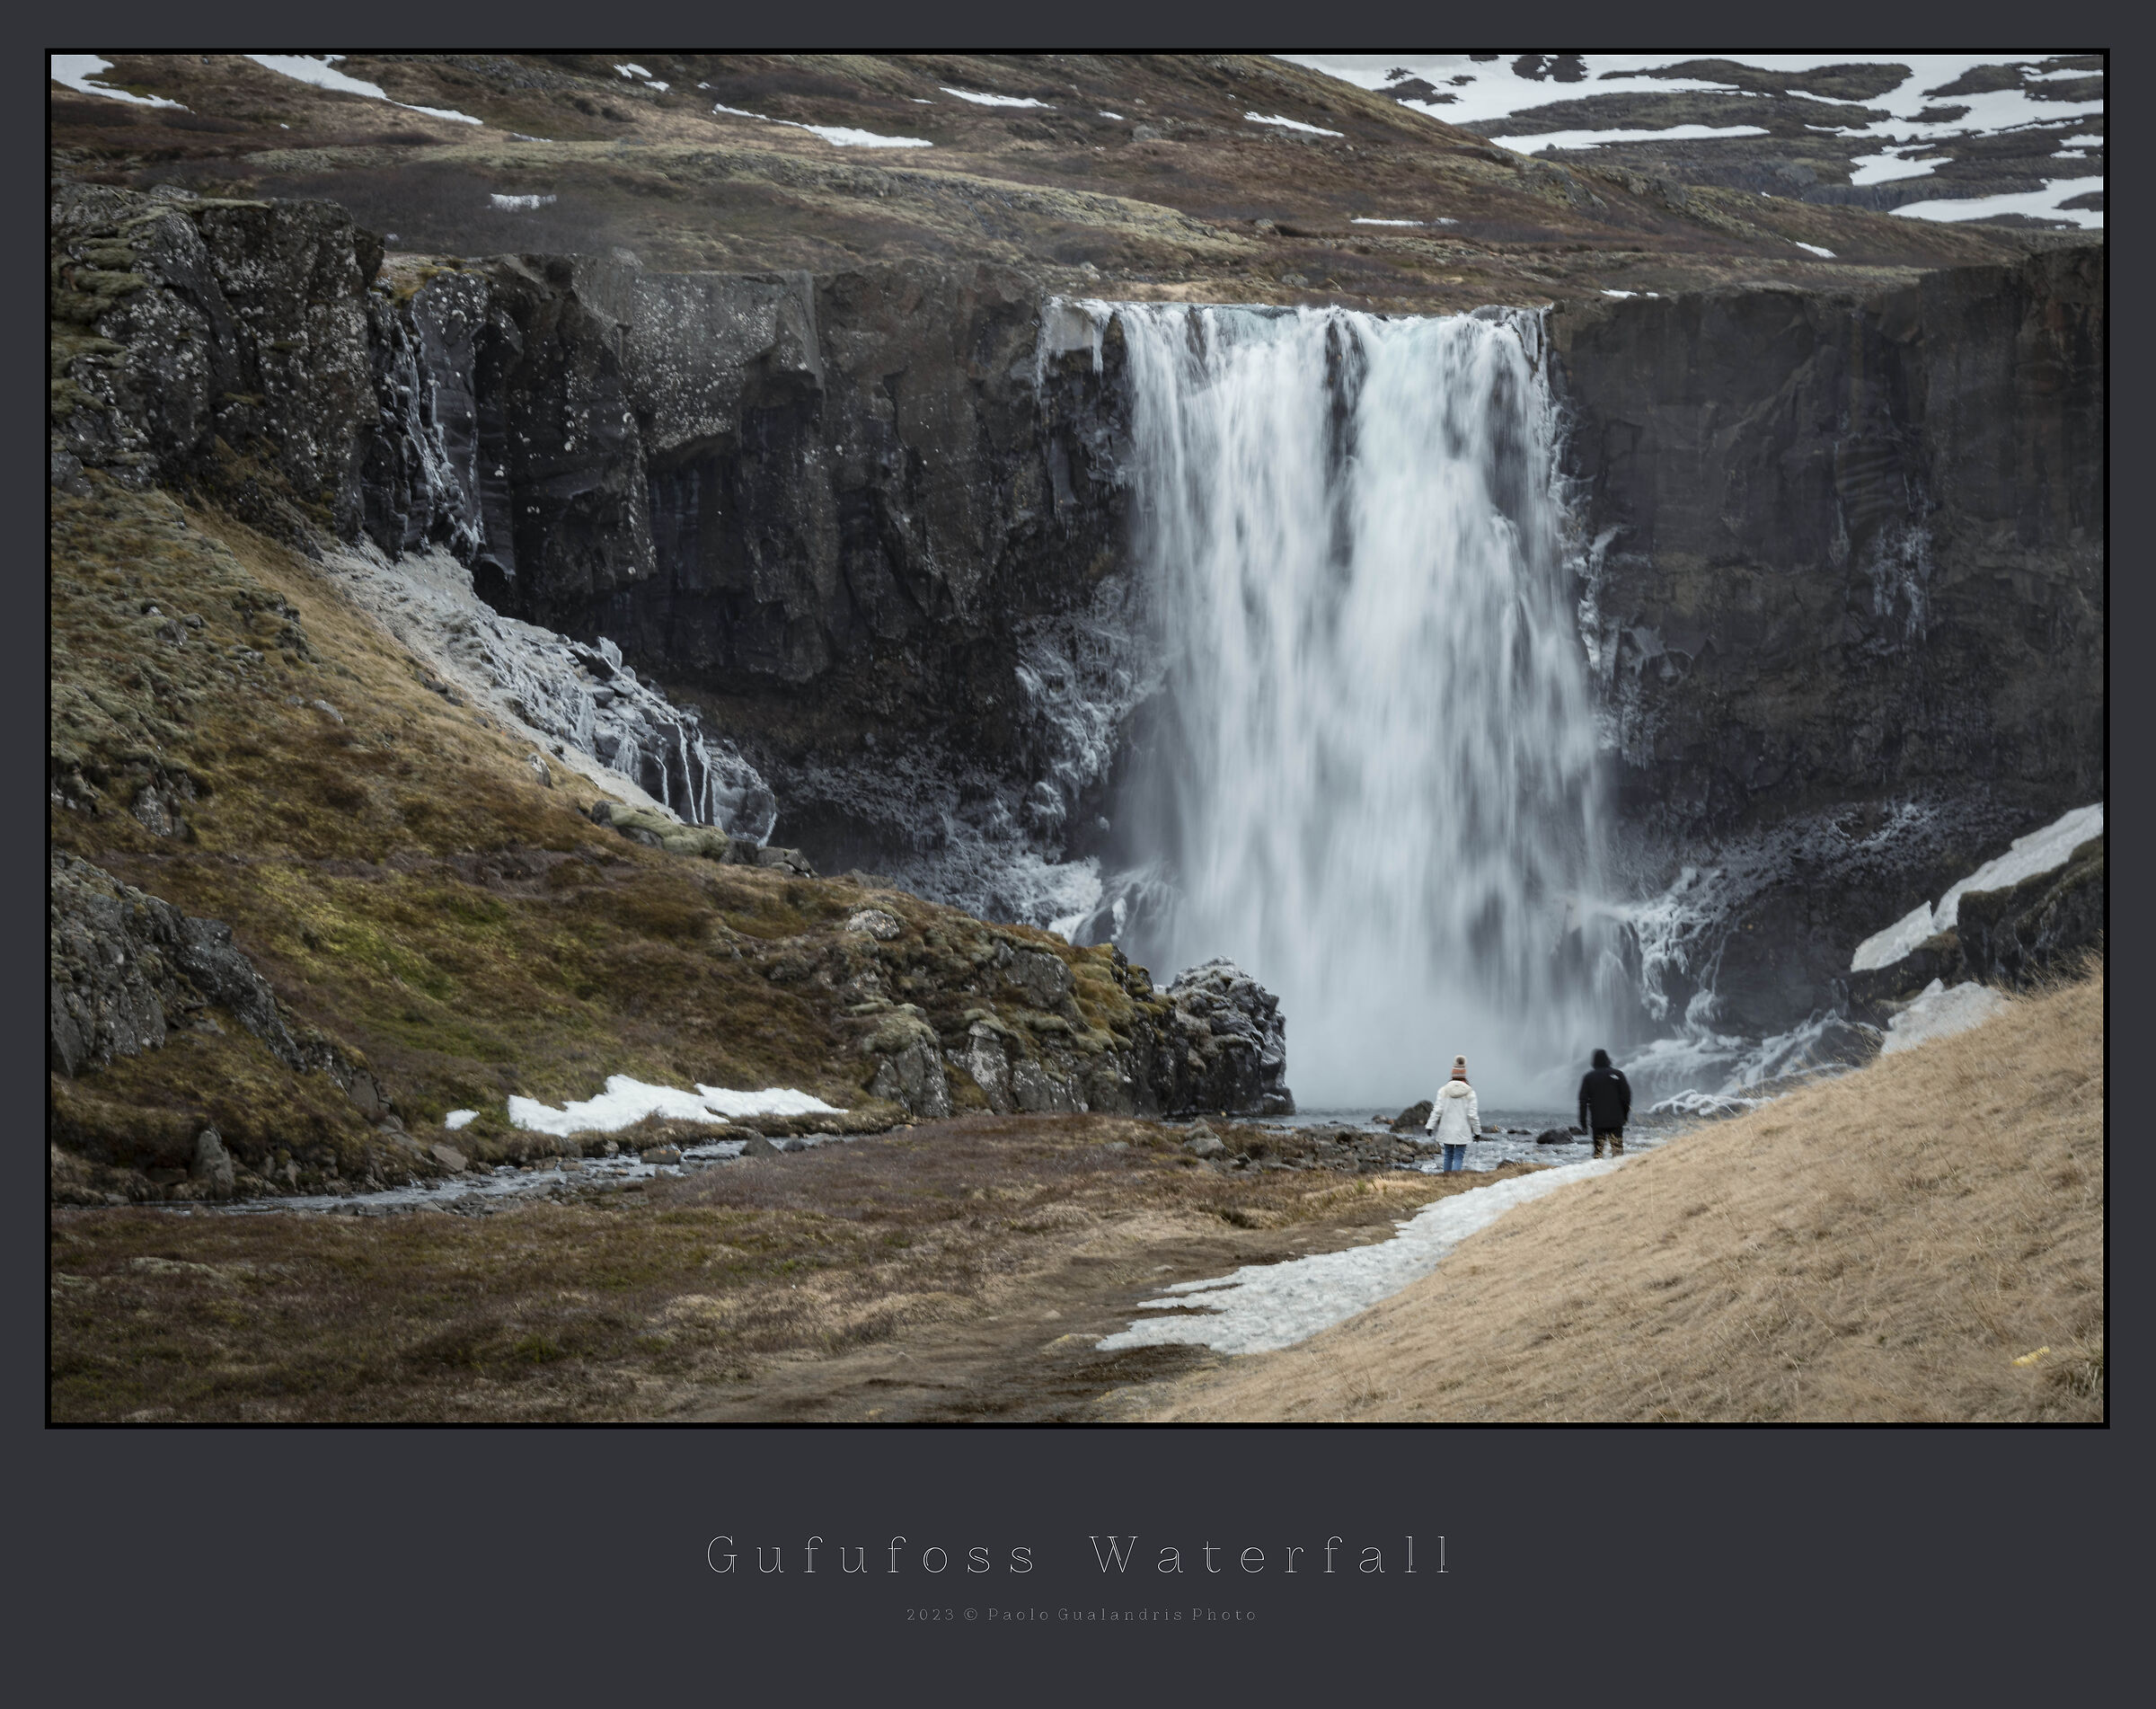 Gufufoss Waterfall...